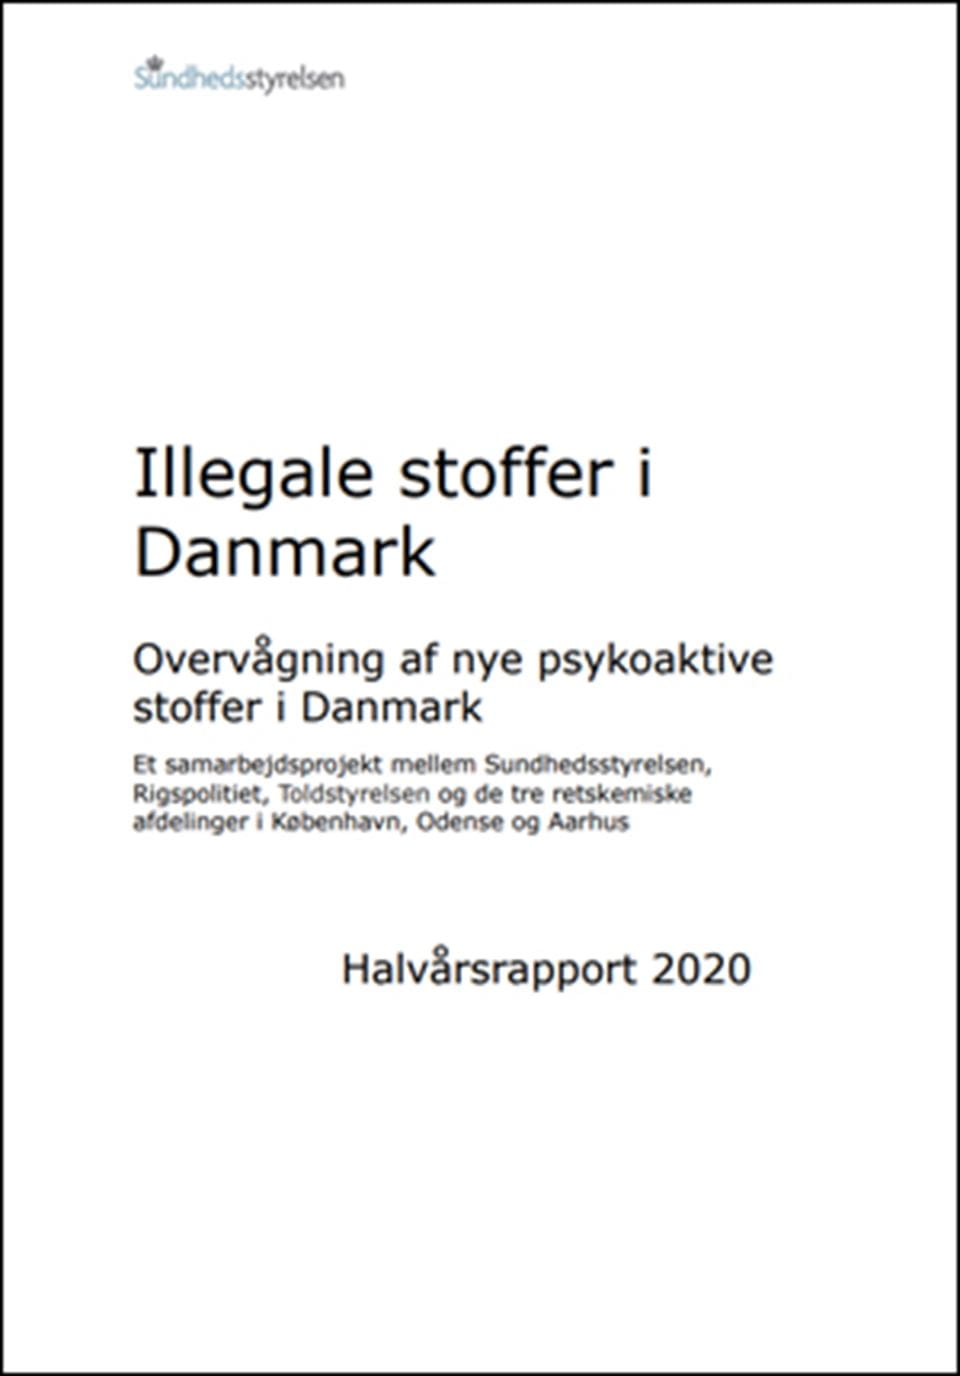 Illegale stoffer i Danmark halvårsrapport